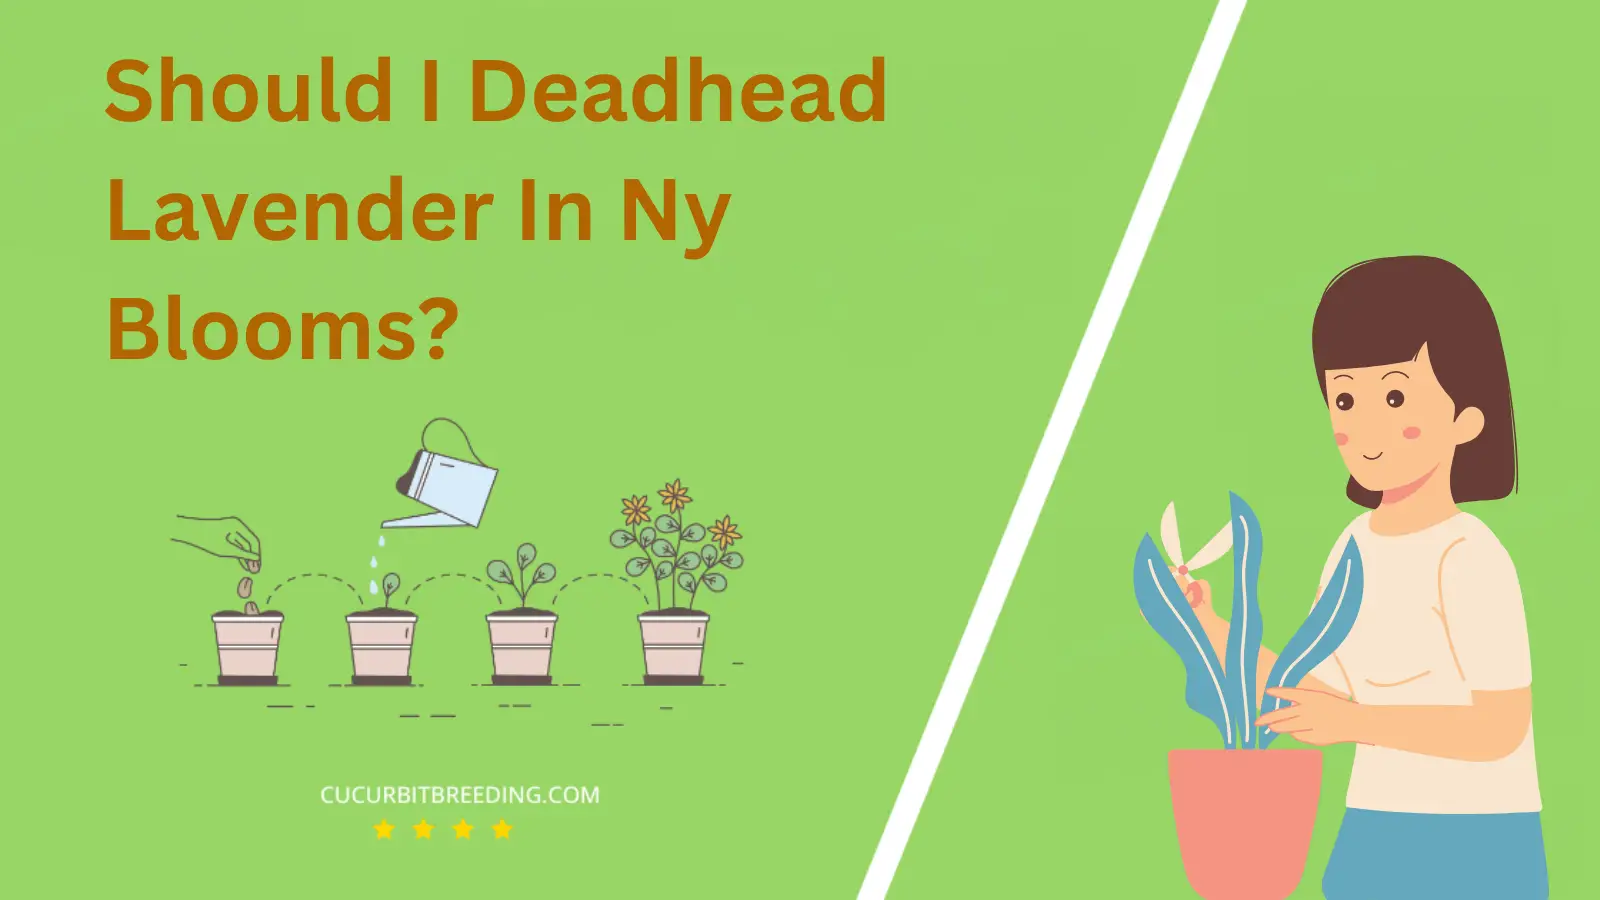 Should I Deadhead Lavender In Ny Blooms?